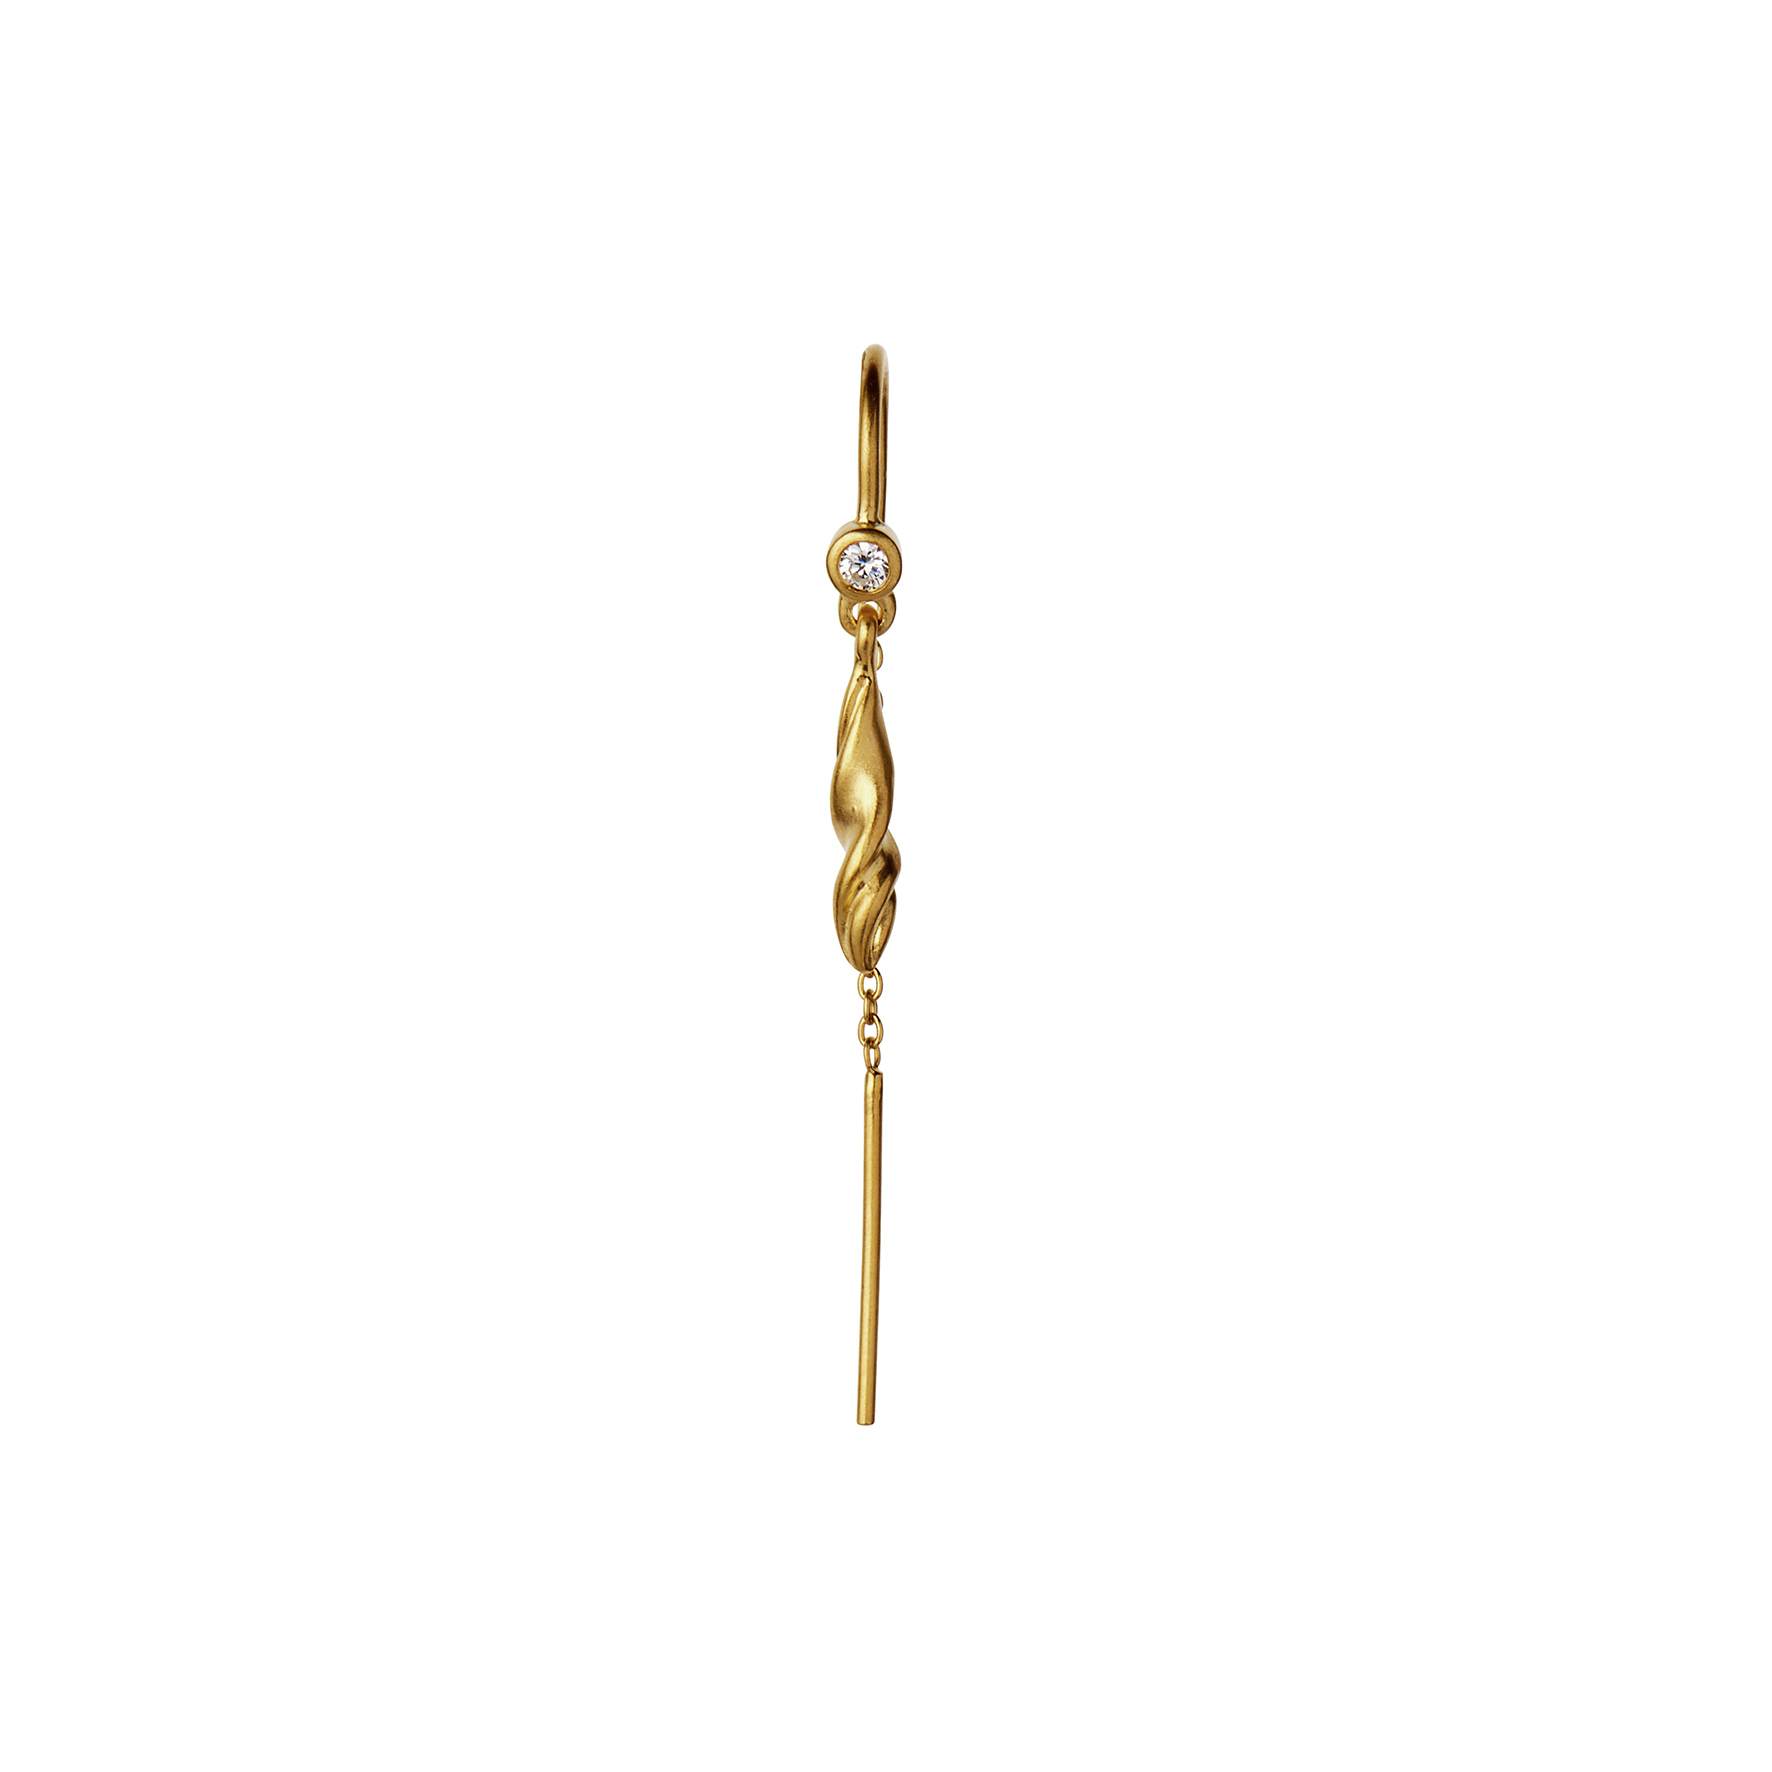 Dangling Petit Velvet Earchain von STINE A Jewelry in Vergoldet-Silber Sterling 925